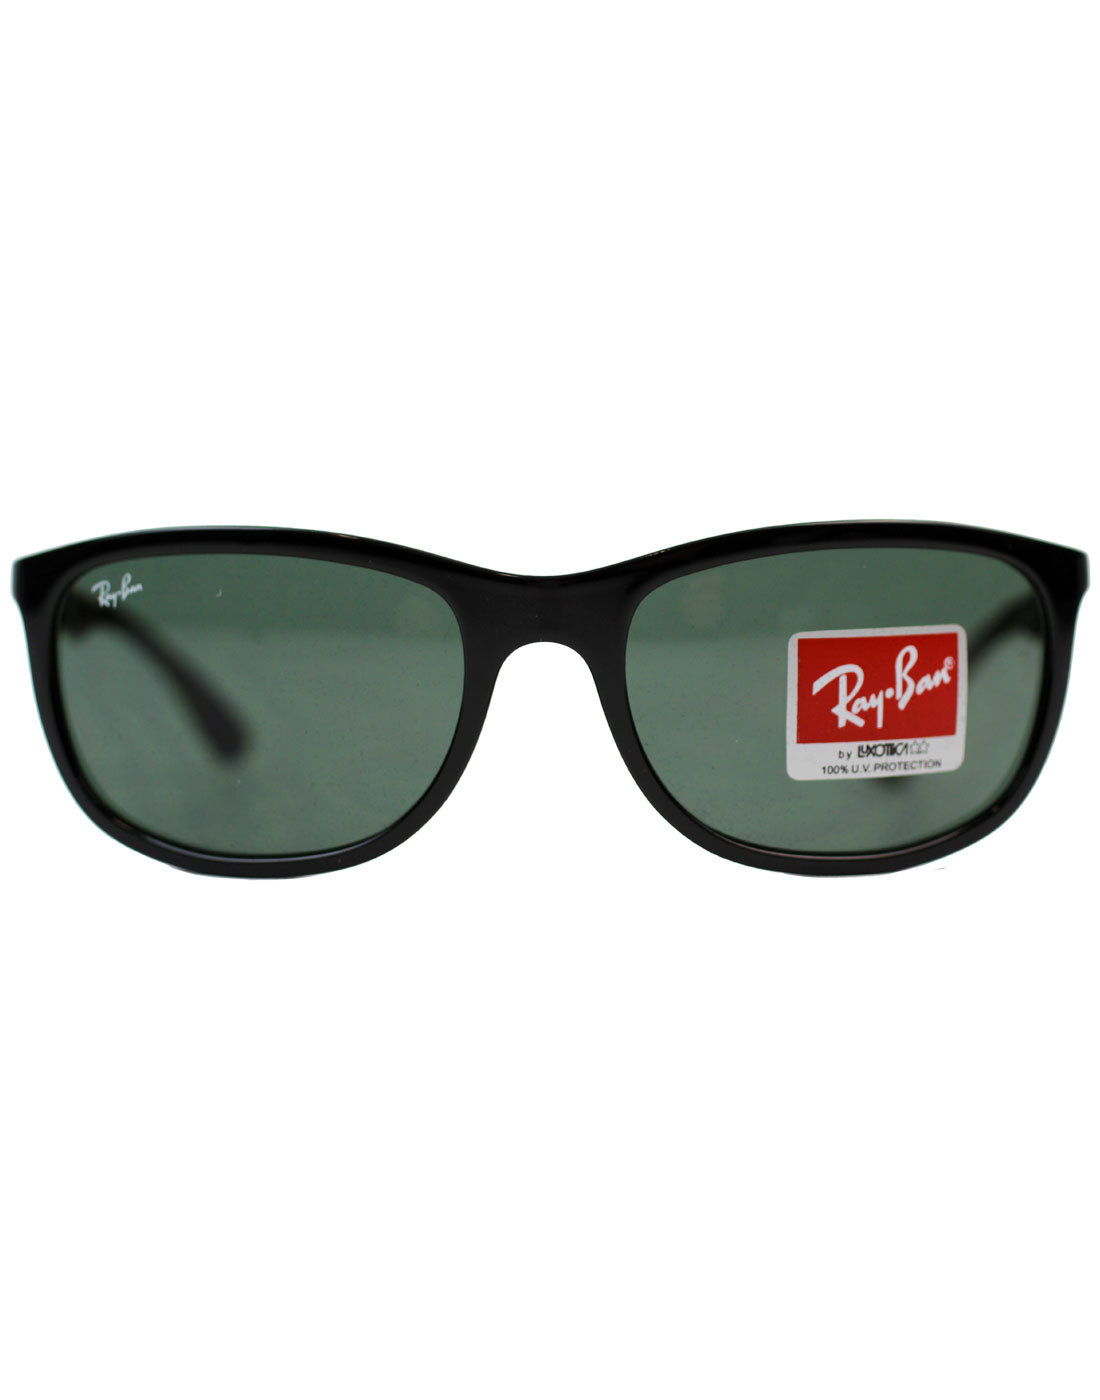 RAY-BAN Wraparound Wayfarer Retro Mod Wayfarer Sunglasses Black